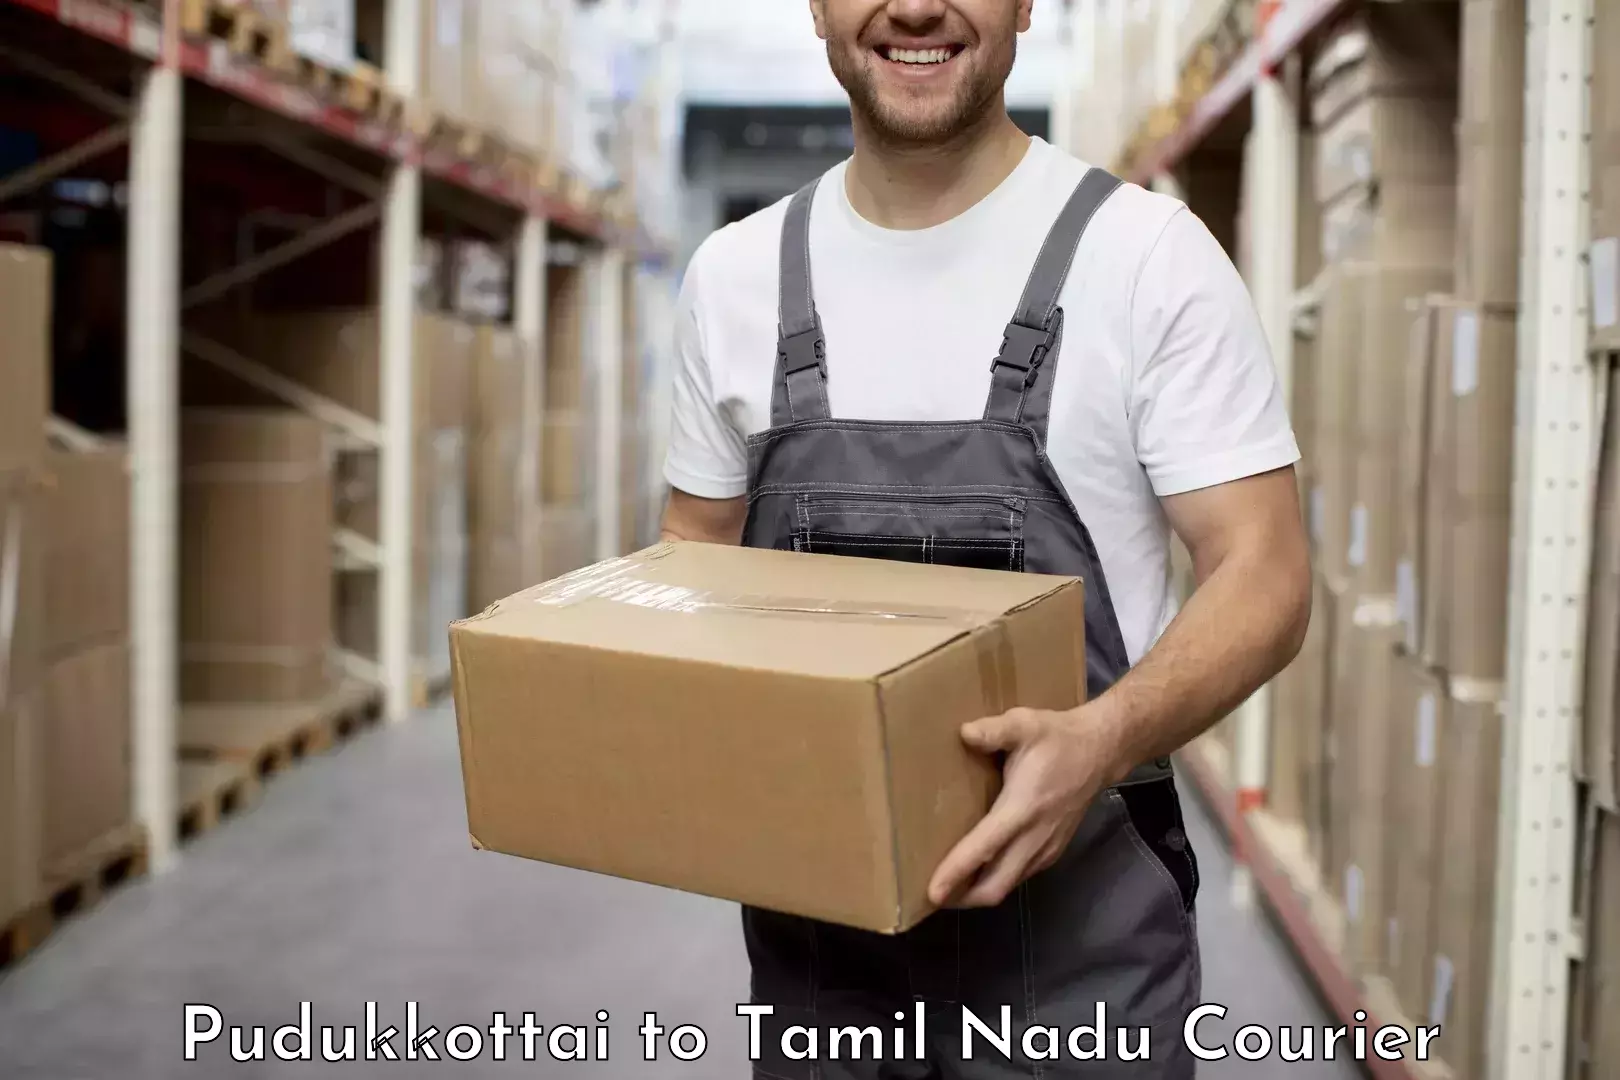 Courier service innovation Pudukkottai to Tamil Nadu